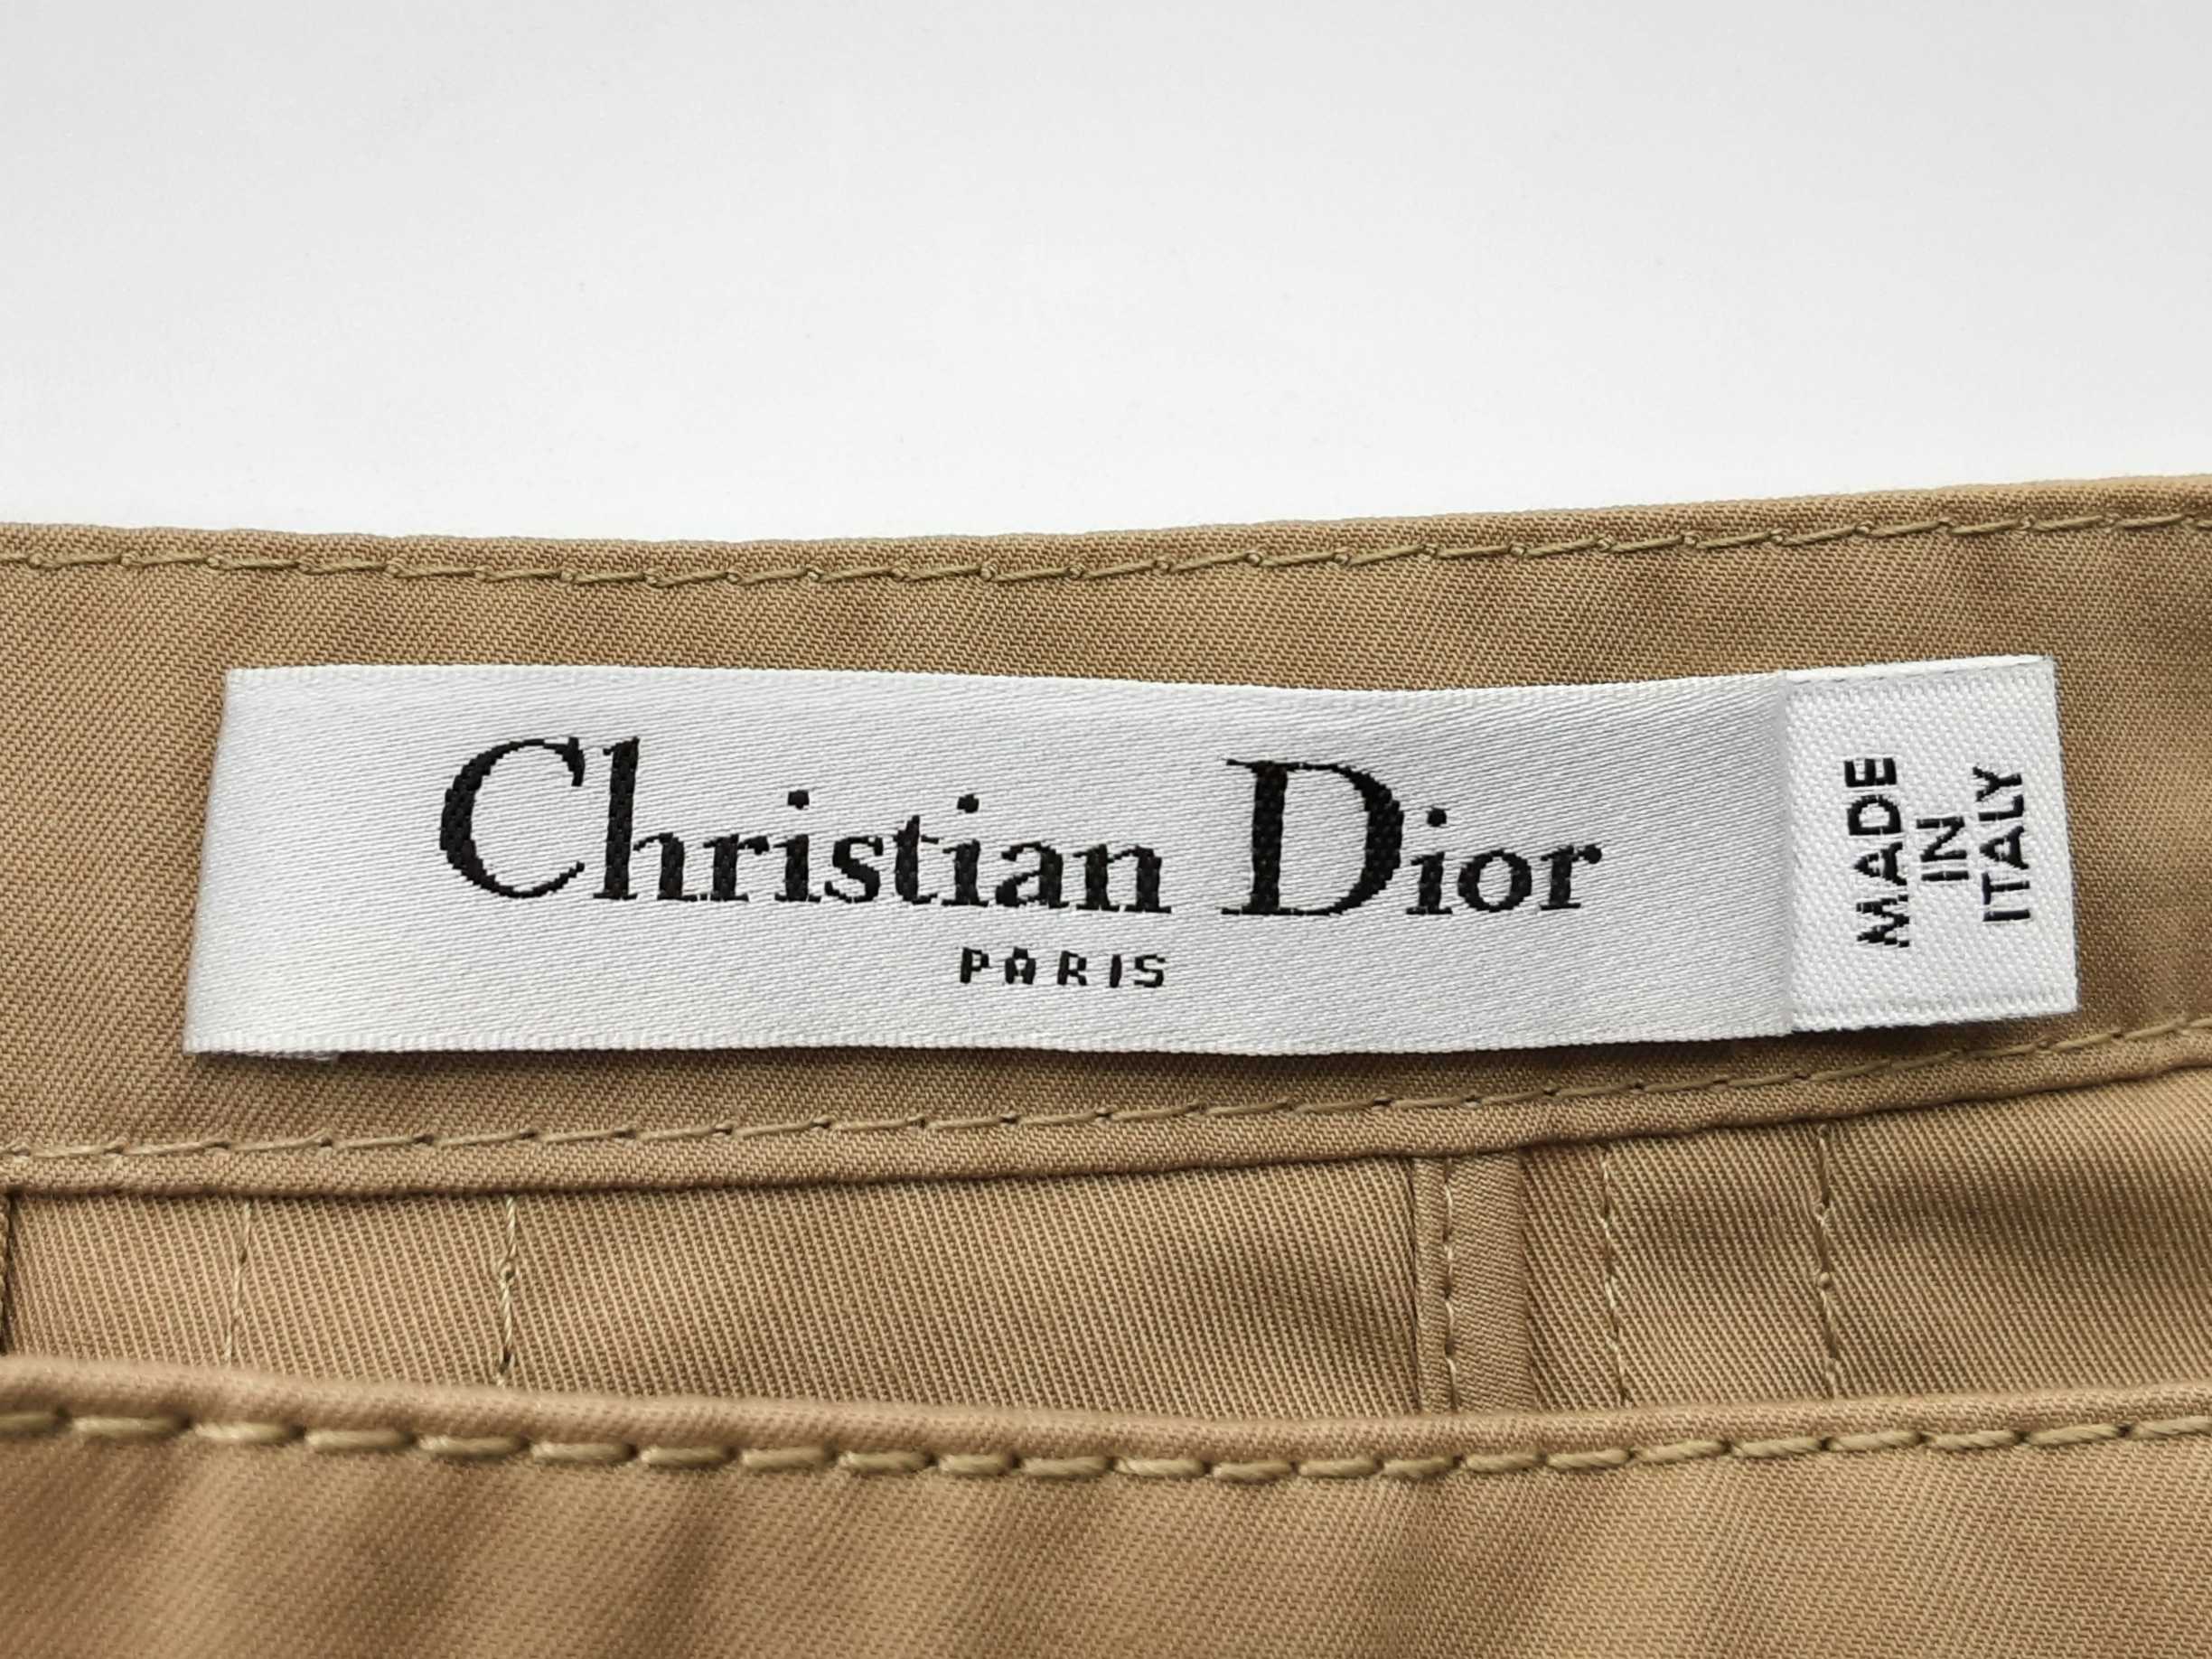 Christian Dior Tan Pleated Skirt Doorxde 144010015235